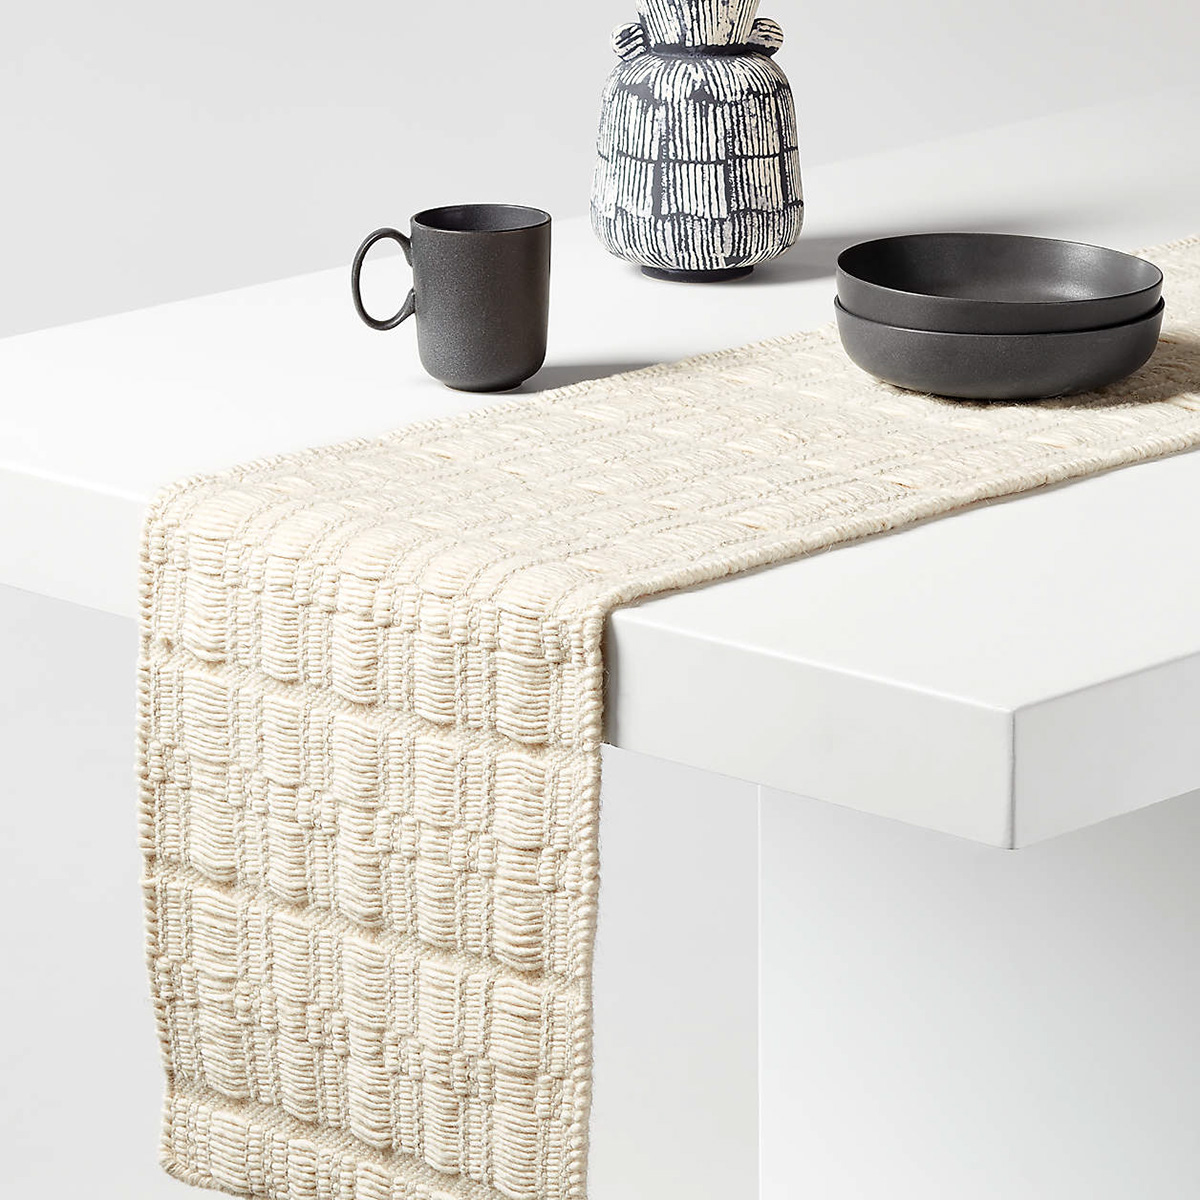 Fashion  handcrafted handmade surface design tablelinen tablerunner textile textiledesign texture wool